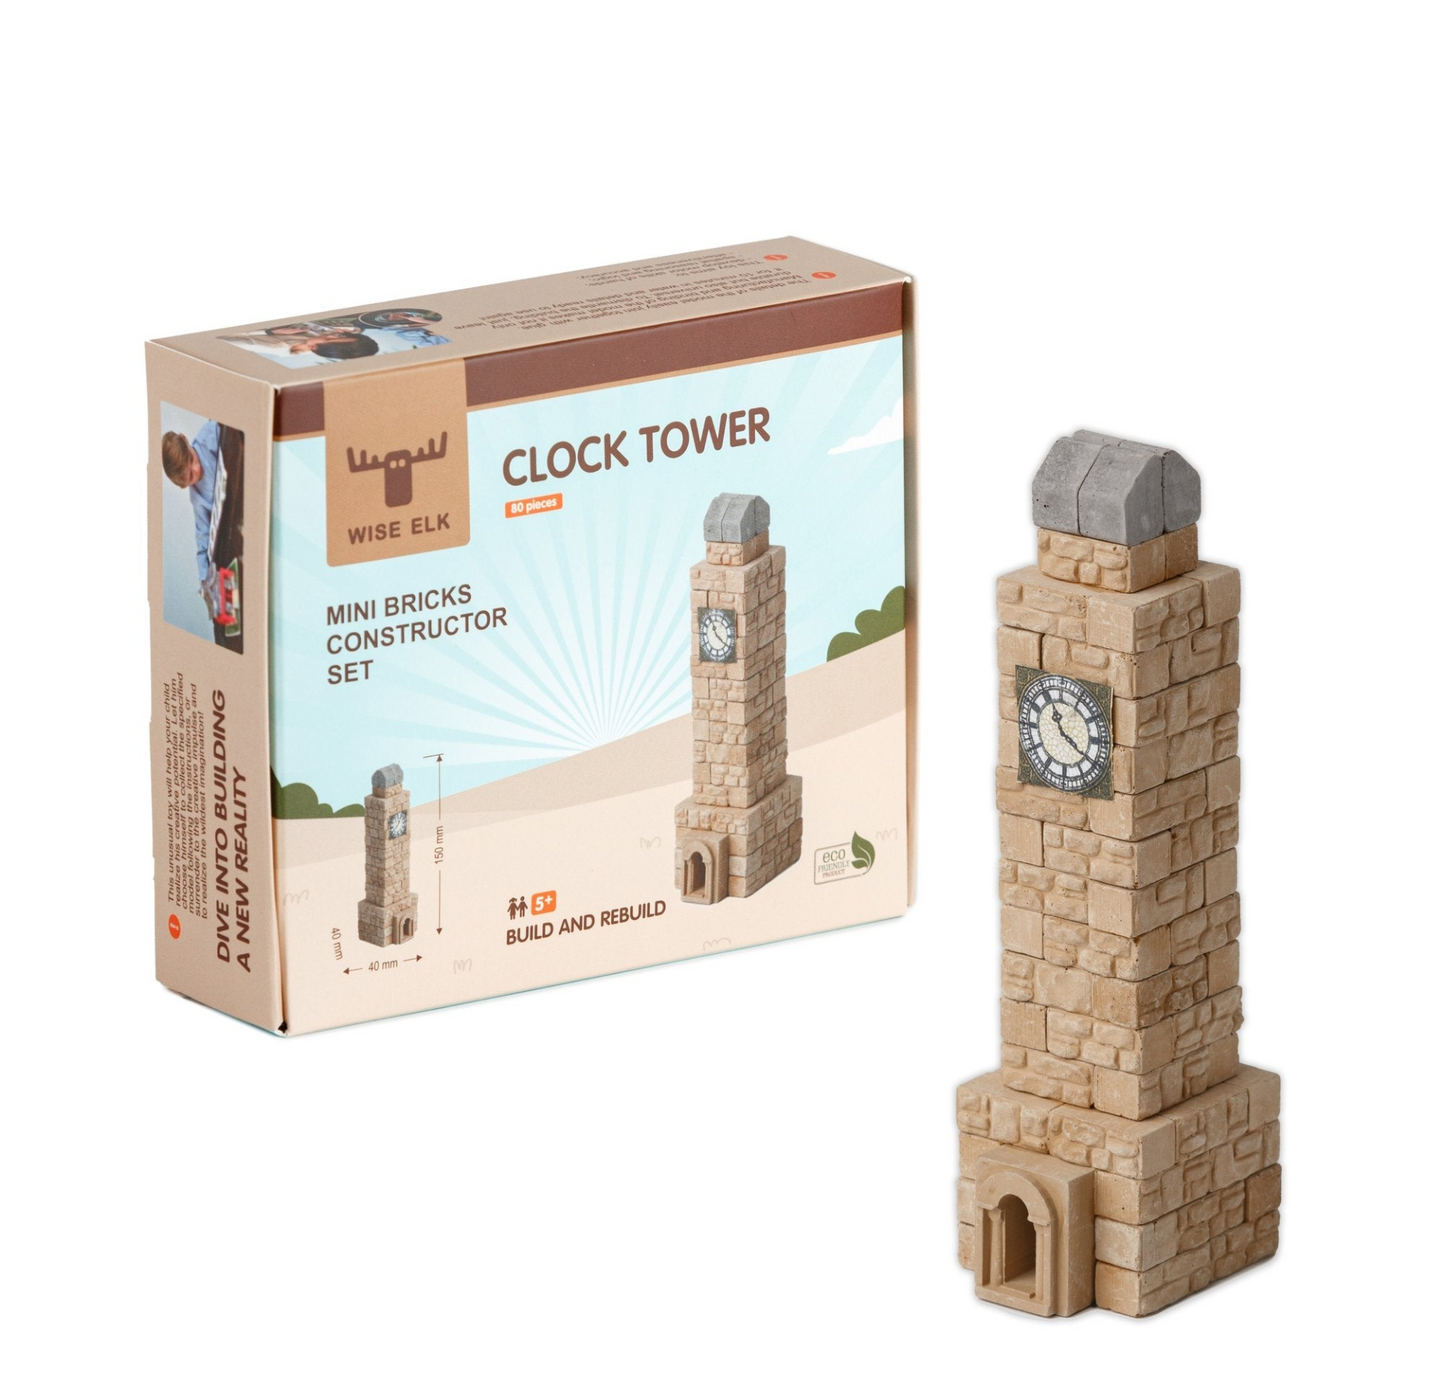 Mini Bricks Construction Set - Clock Tower